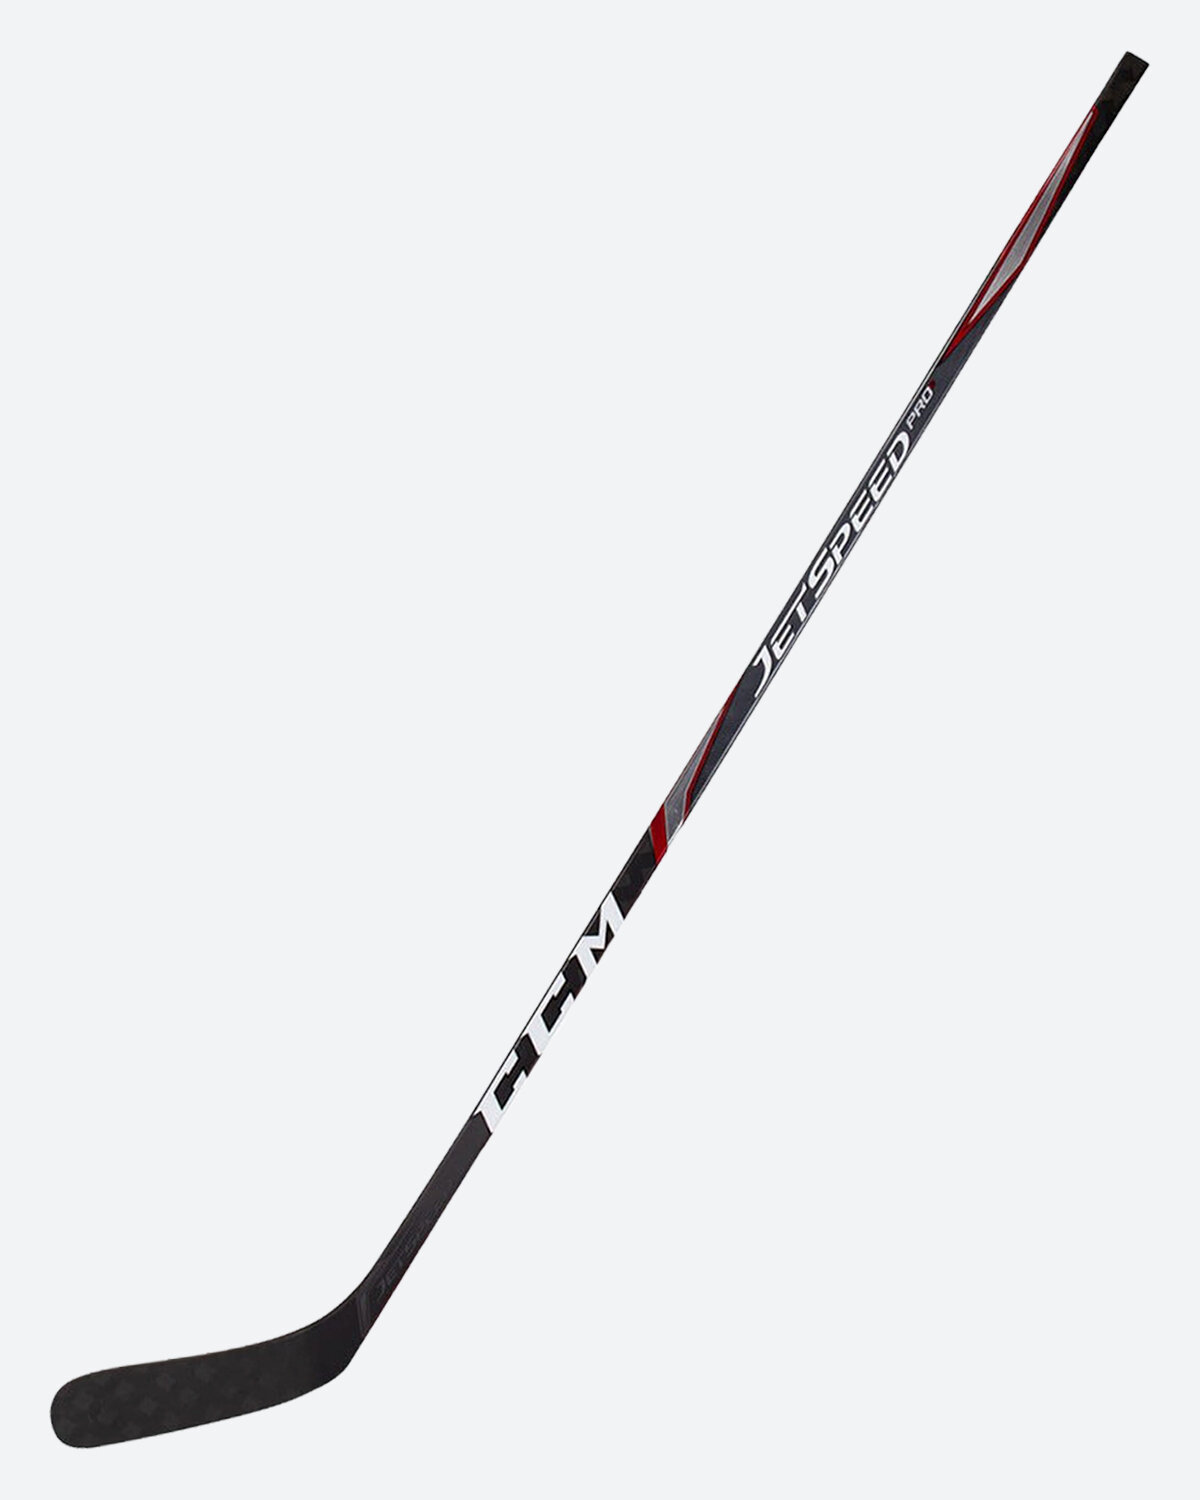 Хоккейная клюшка CCM JETSPEED PRO 2 JR, 162 см, Р88, правый хват (40)